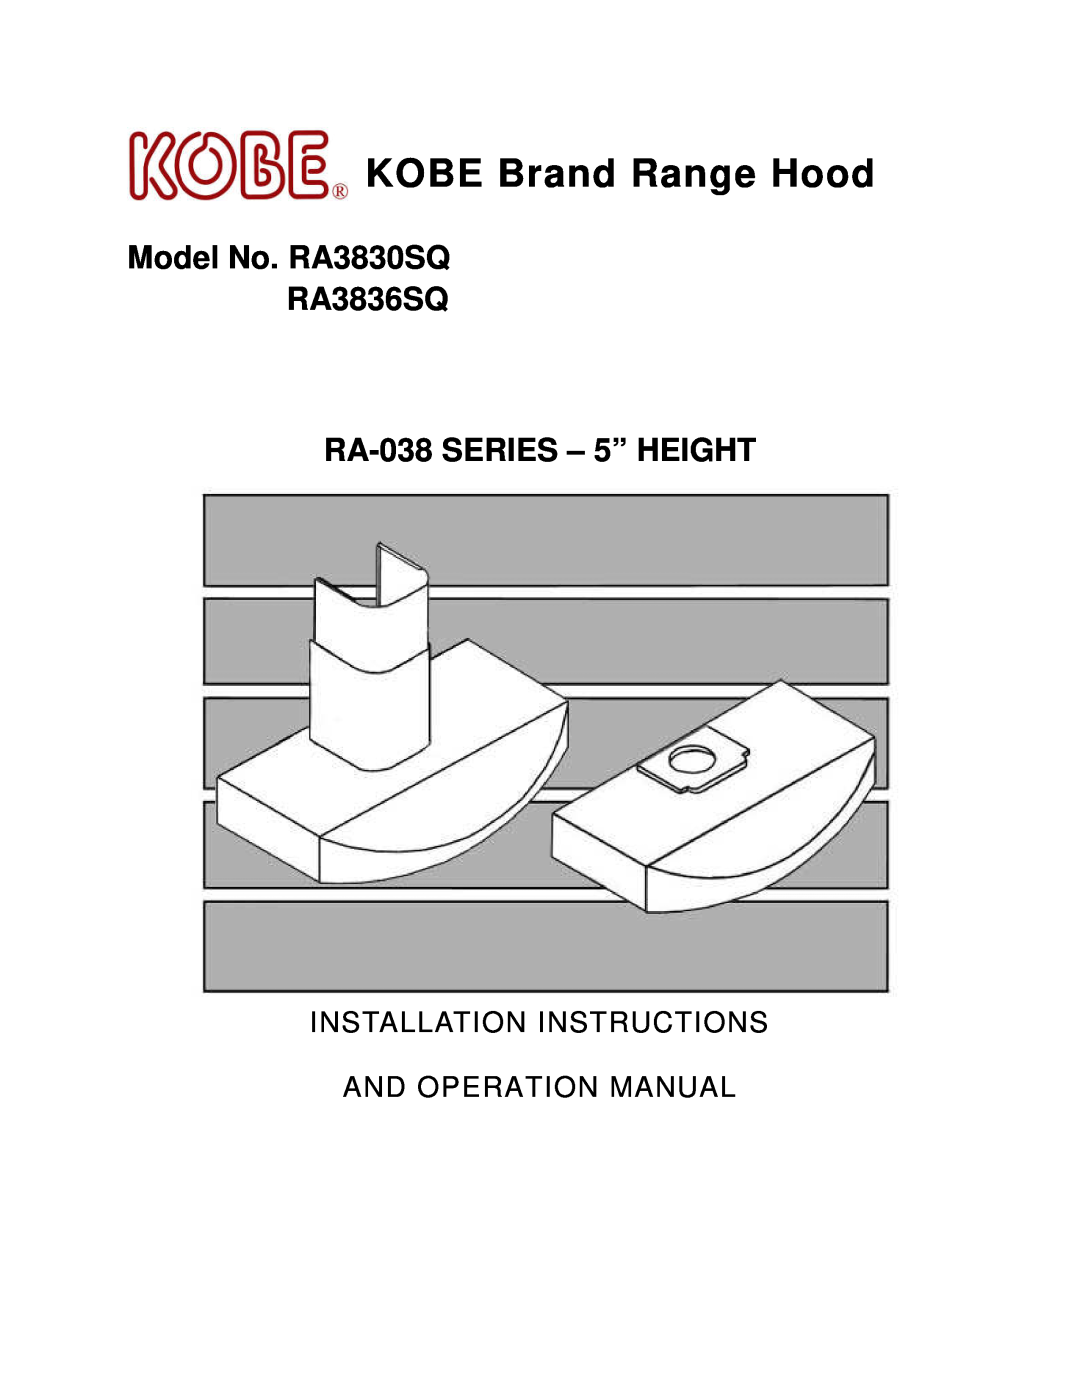 Kobe Range Hoods installation instructions KOBE Brand Range Hood, Model No. RA3830SQ RA3836SQ, RA-038SERIES 5 HEIGHT 